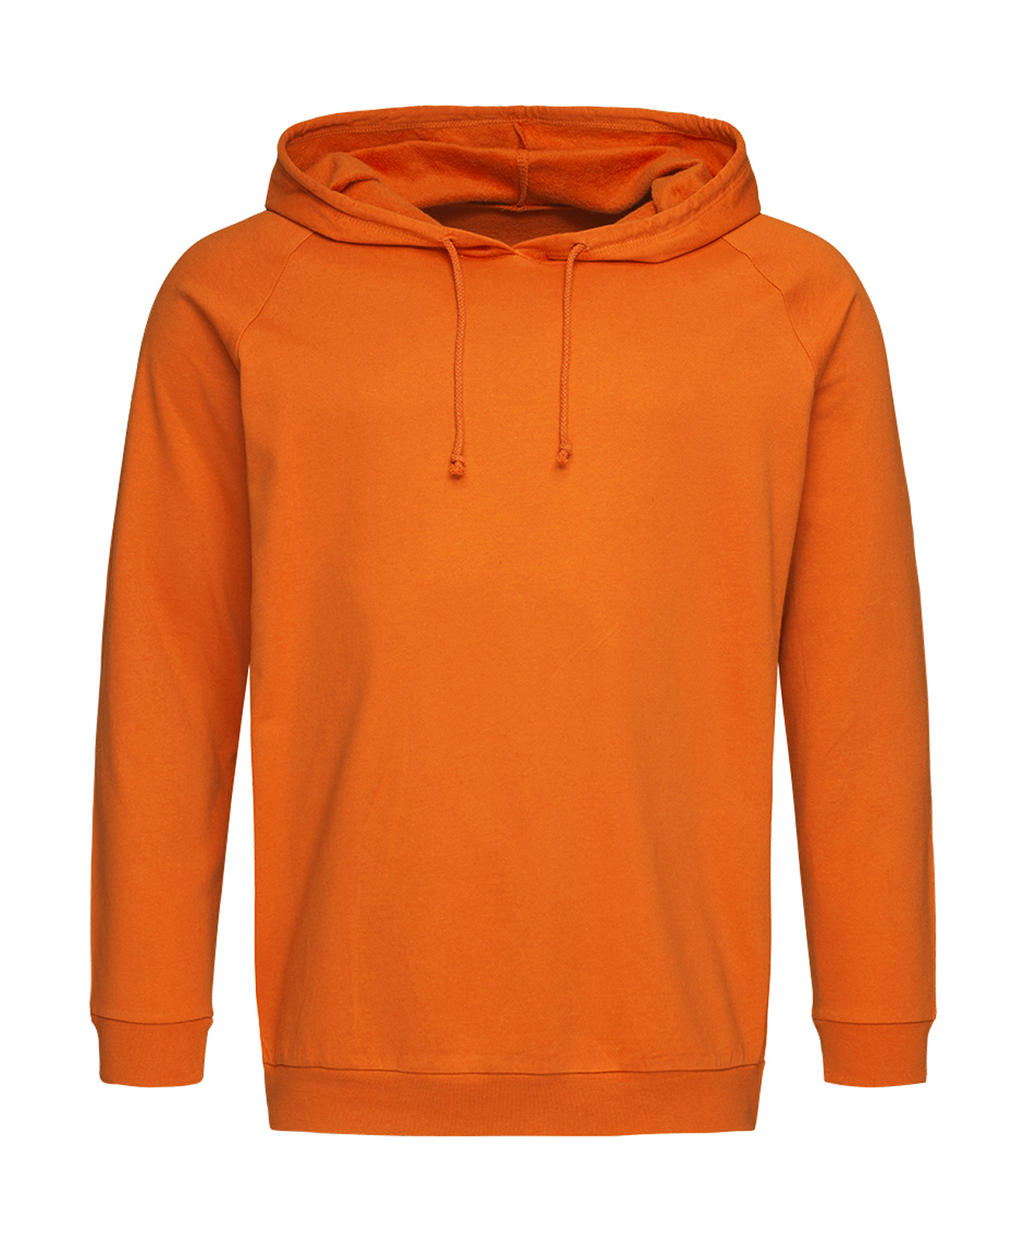  Unisex Sweat Hoodie Light in Farbe Orange